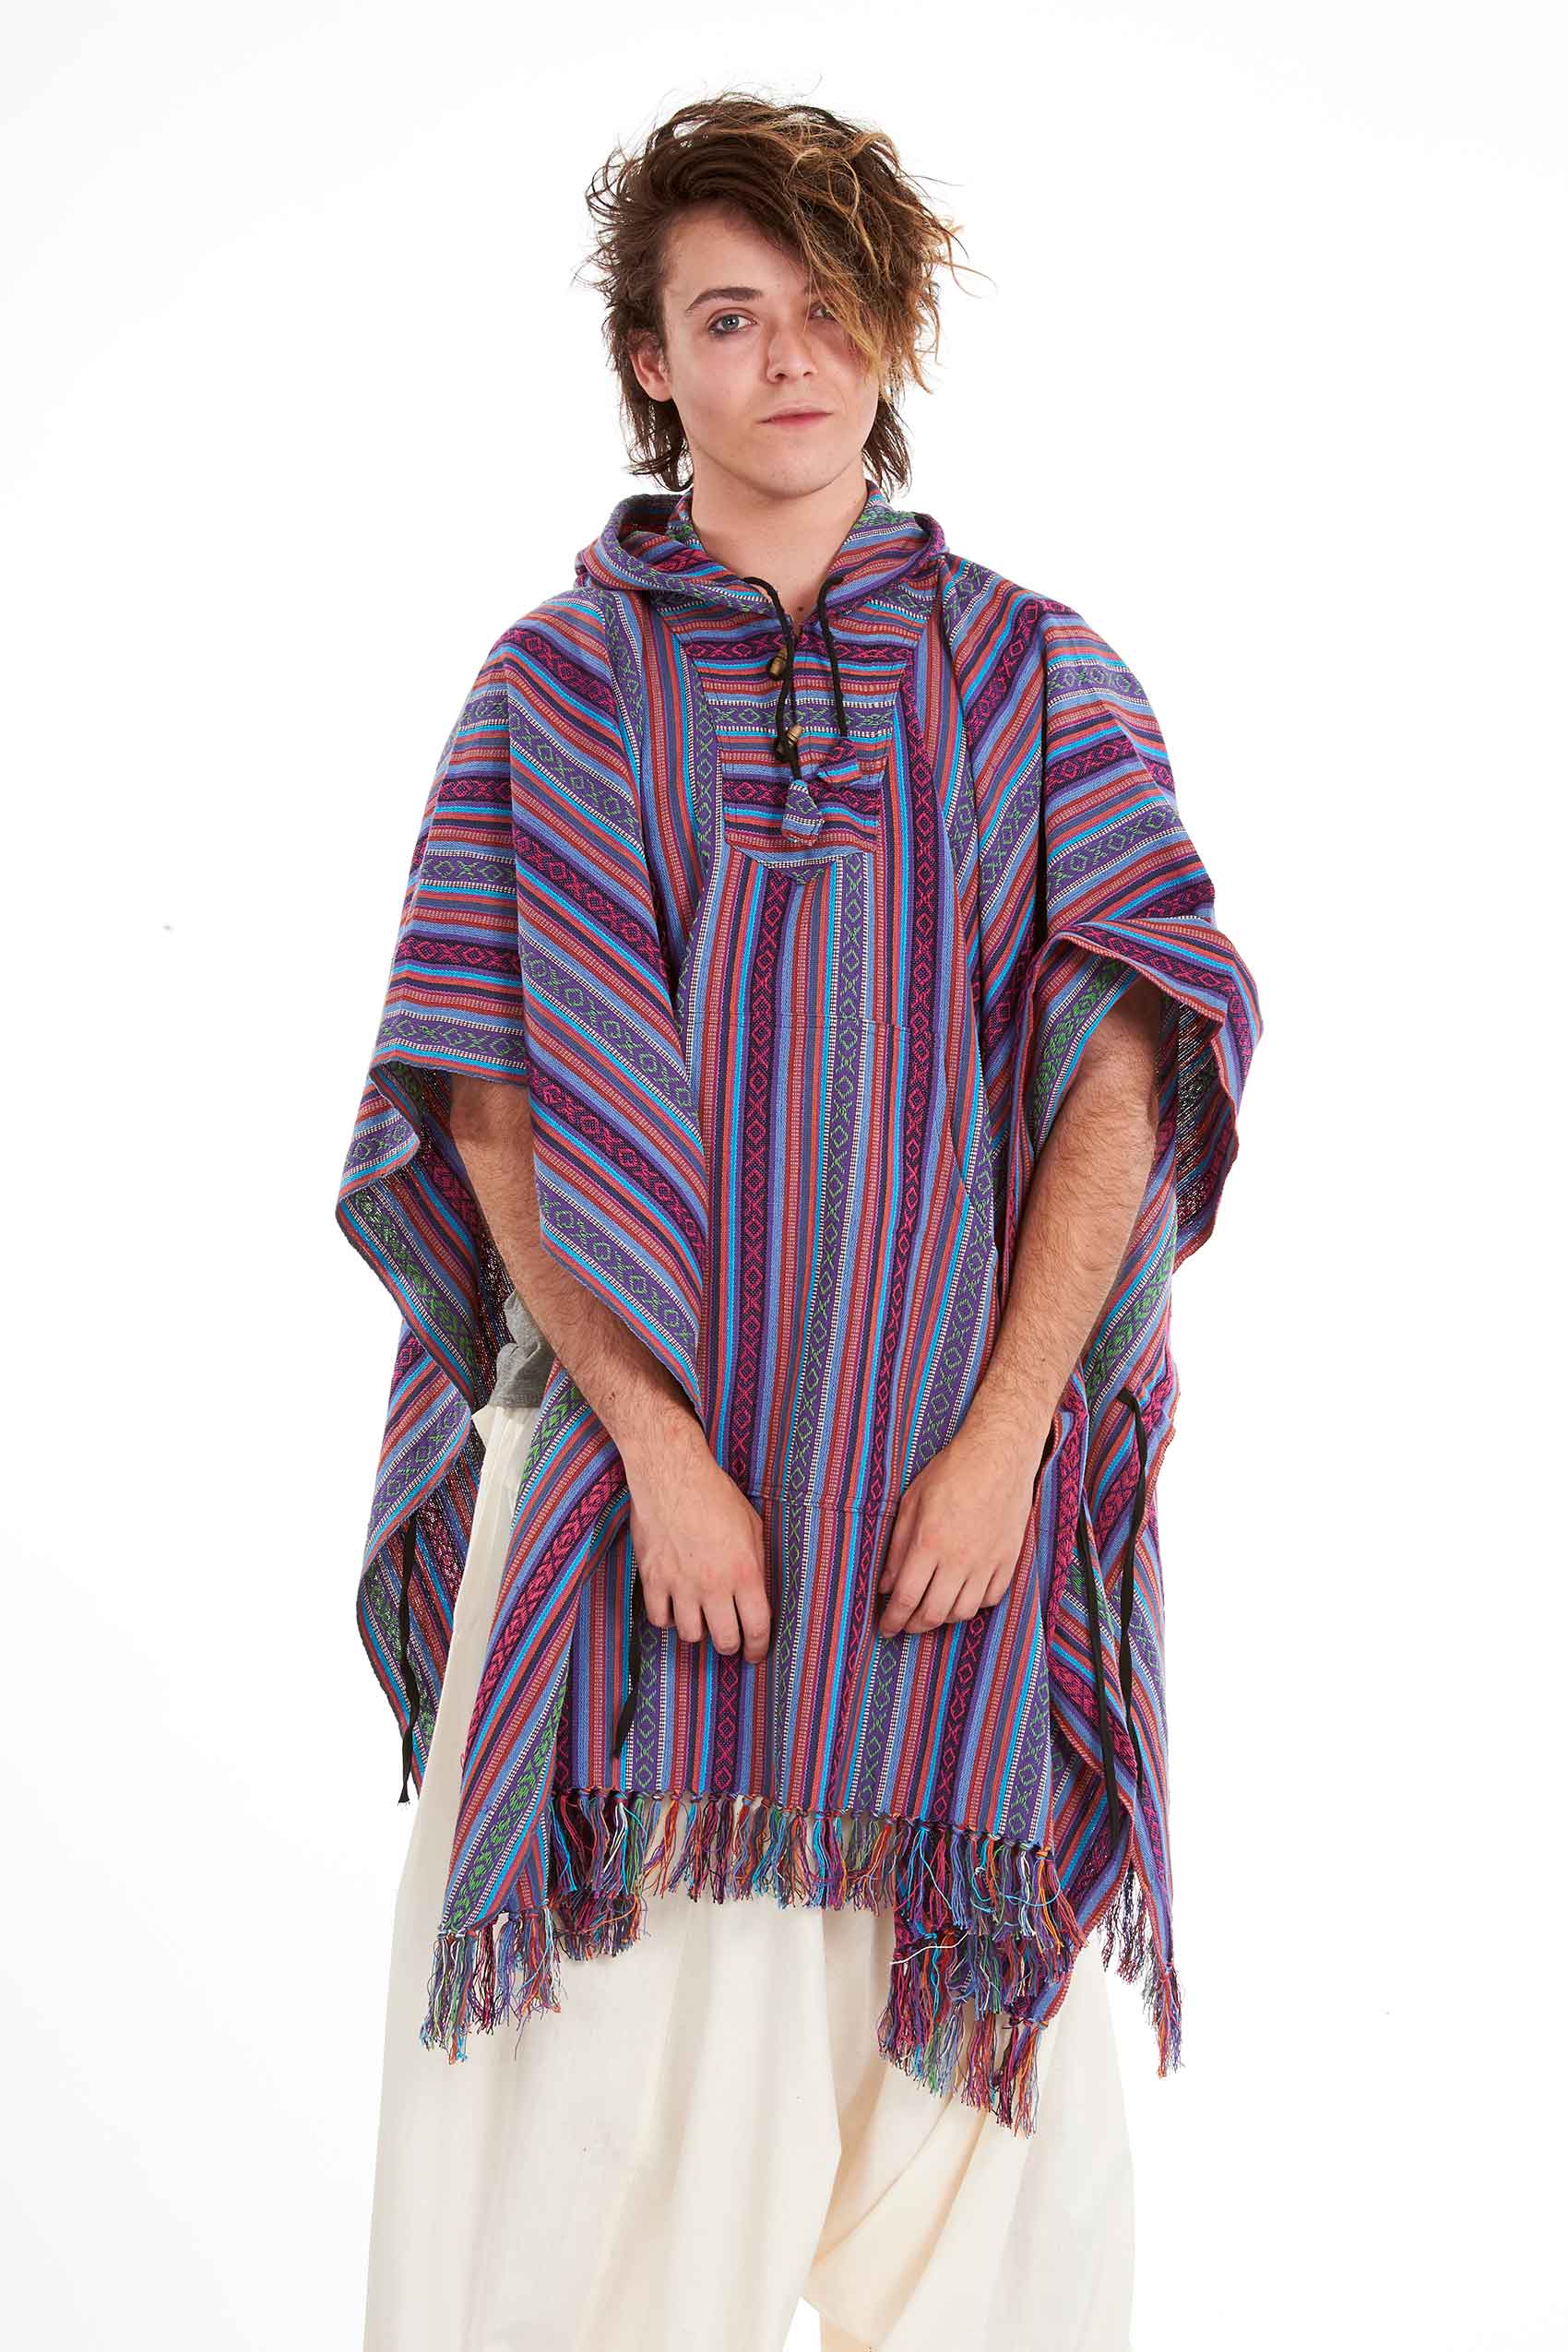 Festival Hippy Poncho, hooded plus size festival clothing | Altshop UK